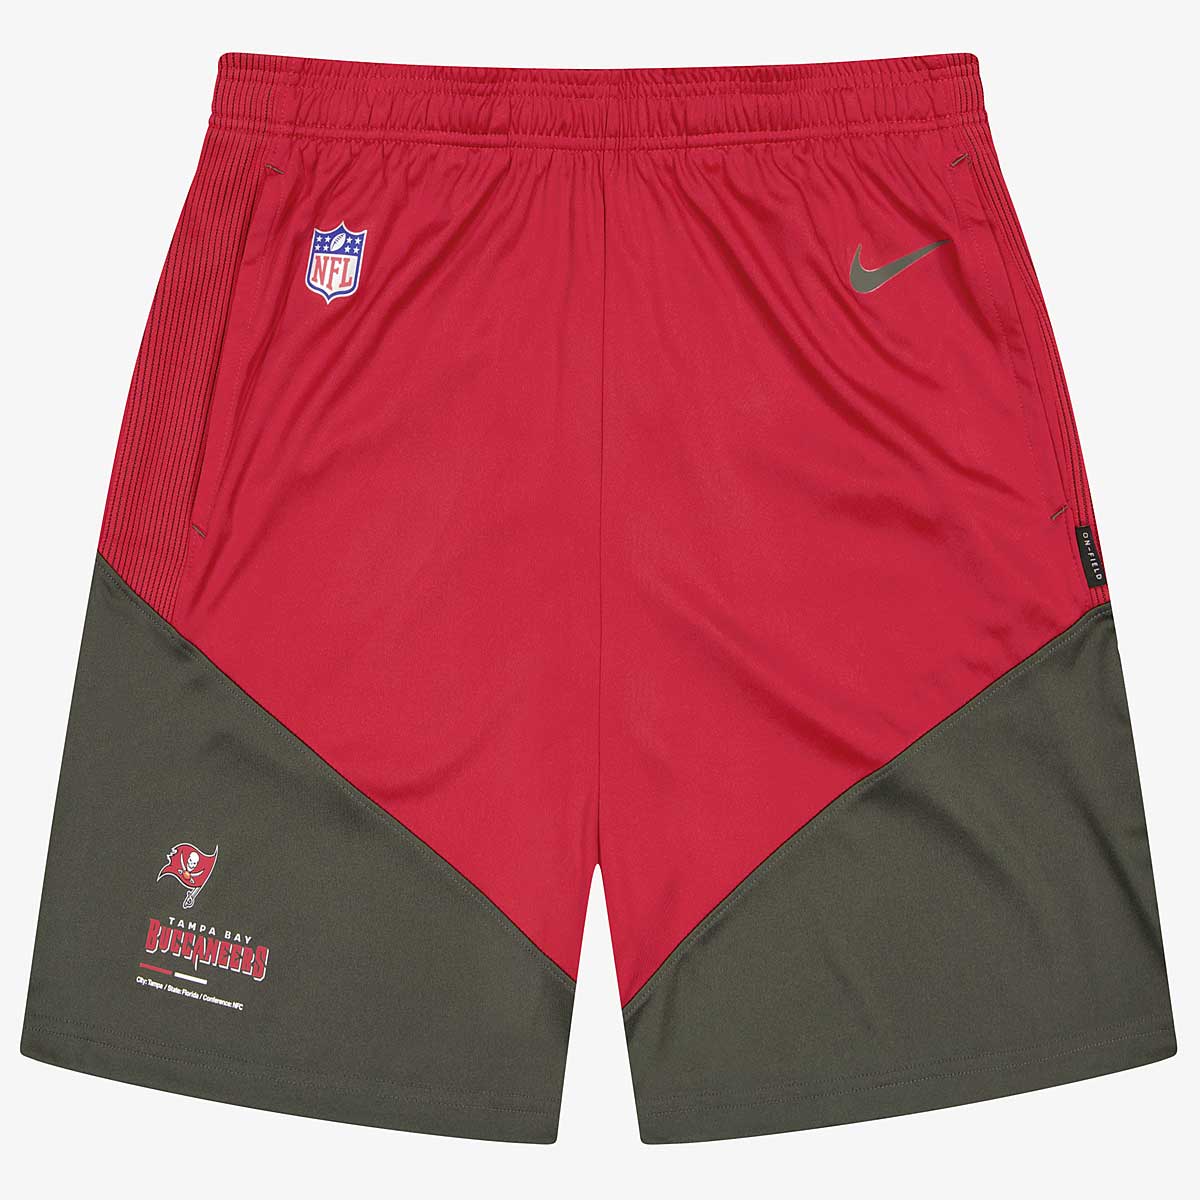 Nike Nfl Tampa Bay Buccaners Dri-Fit Knit Shorts, Gym Red-Deep Pewter-Gym Red Tampa Bay Buccaneers